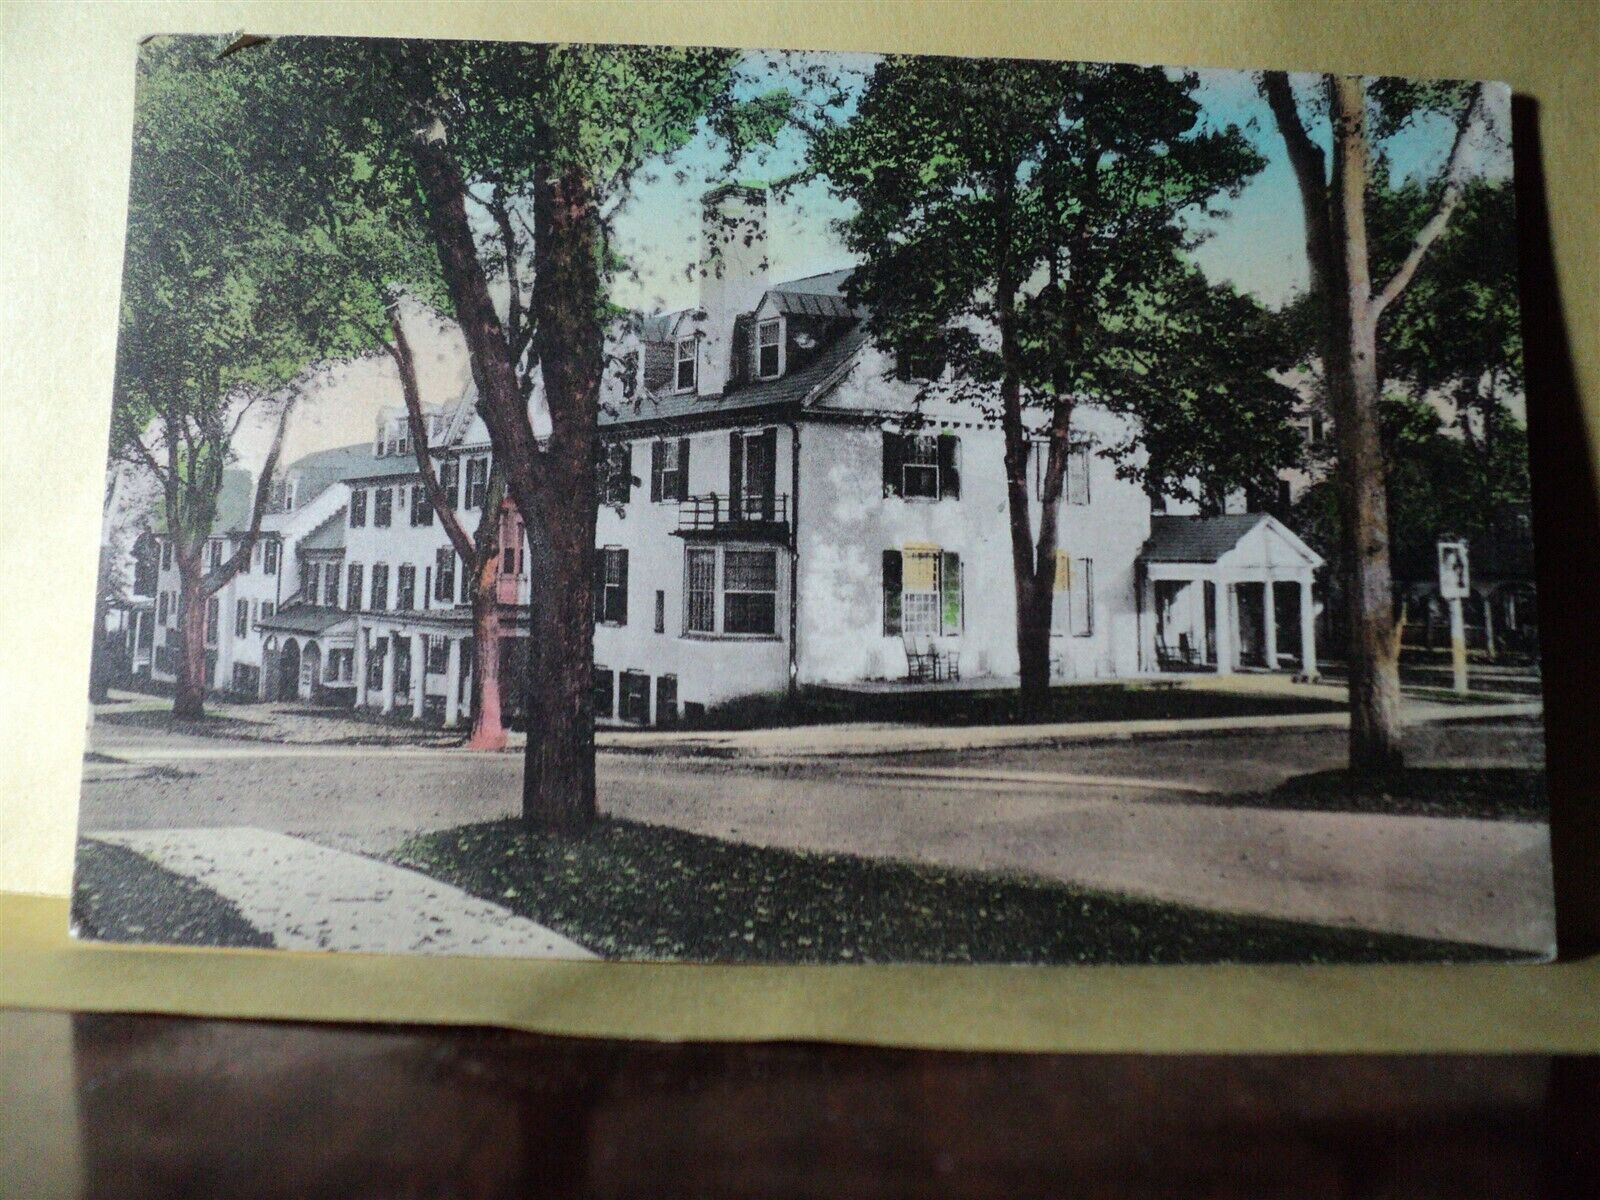 AMHURST MA Massachusetts The Lord Jeffery Hand-Colored 1944 Postcard